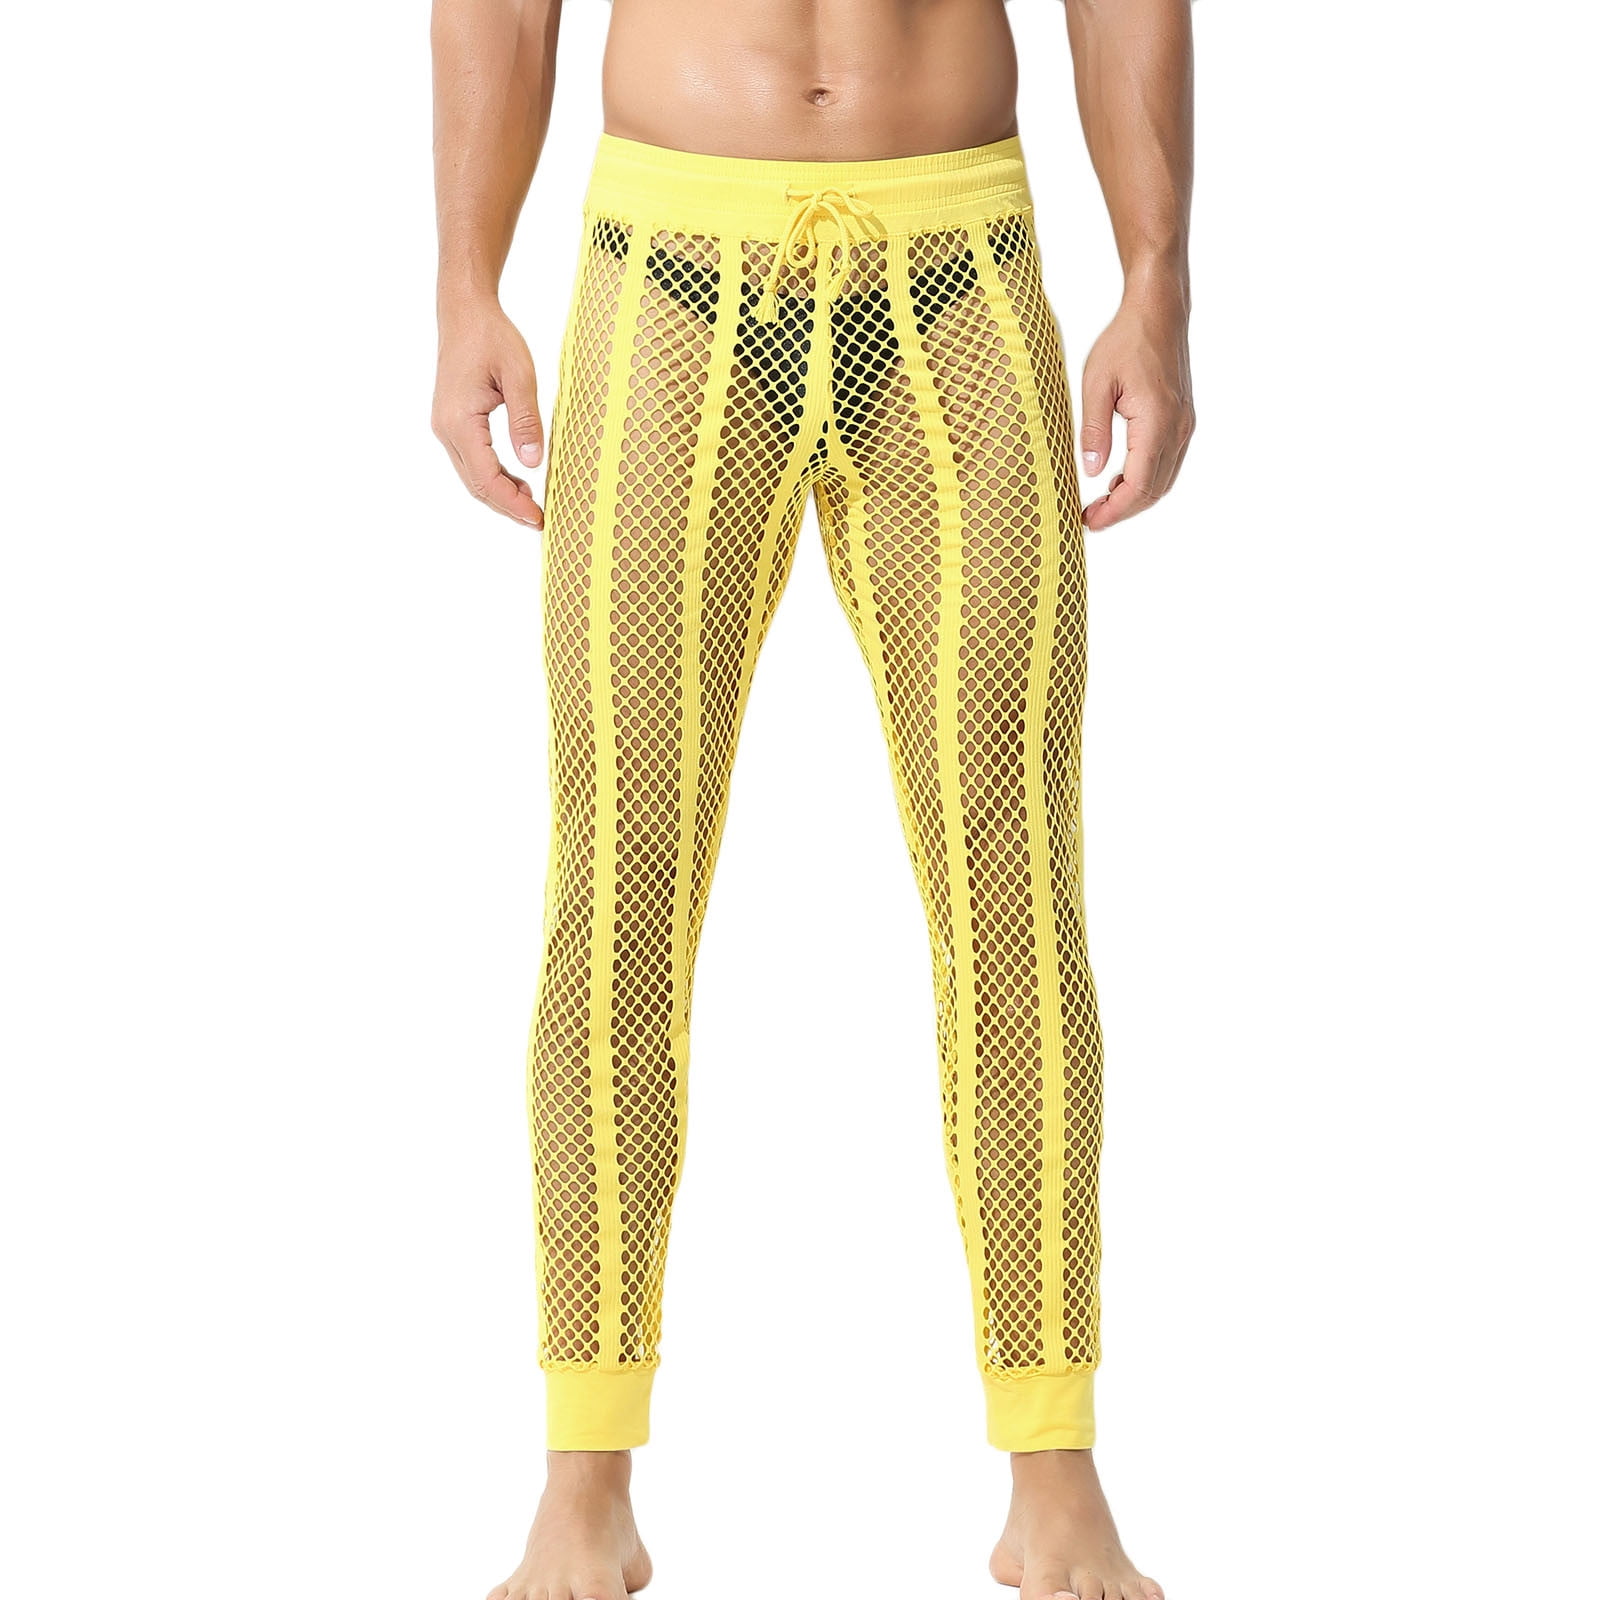 XFLWAM Men s Mesh Fishnet Pants Sexy See Through Leggings Drawstring Striped Workout Sweatpants Yellow S e860432d b64e 4cc1 ba8d 4fb34ee23ebe.760f3213ce88c25280cd3f6ac9416c9f